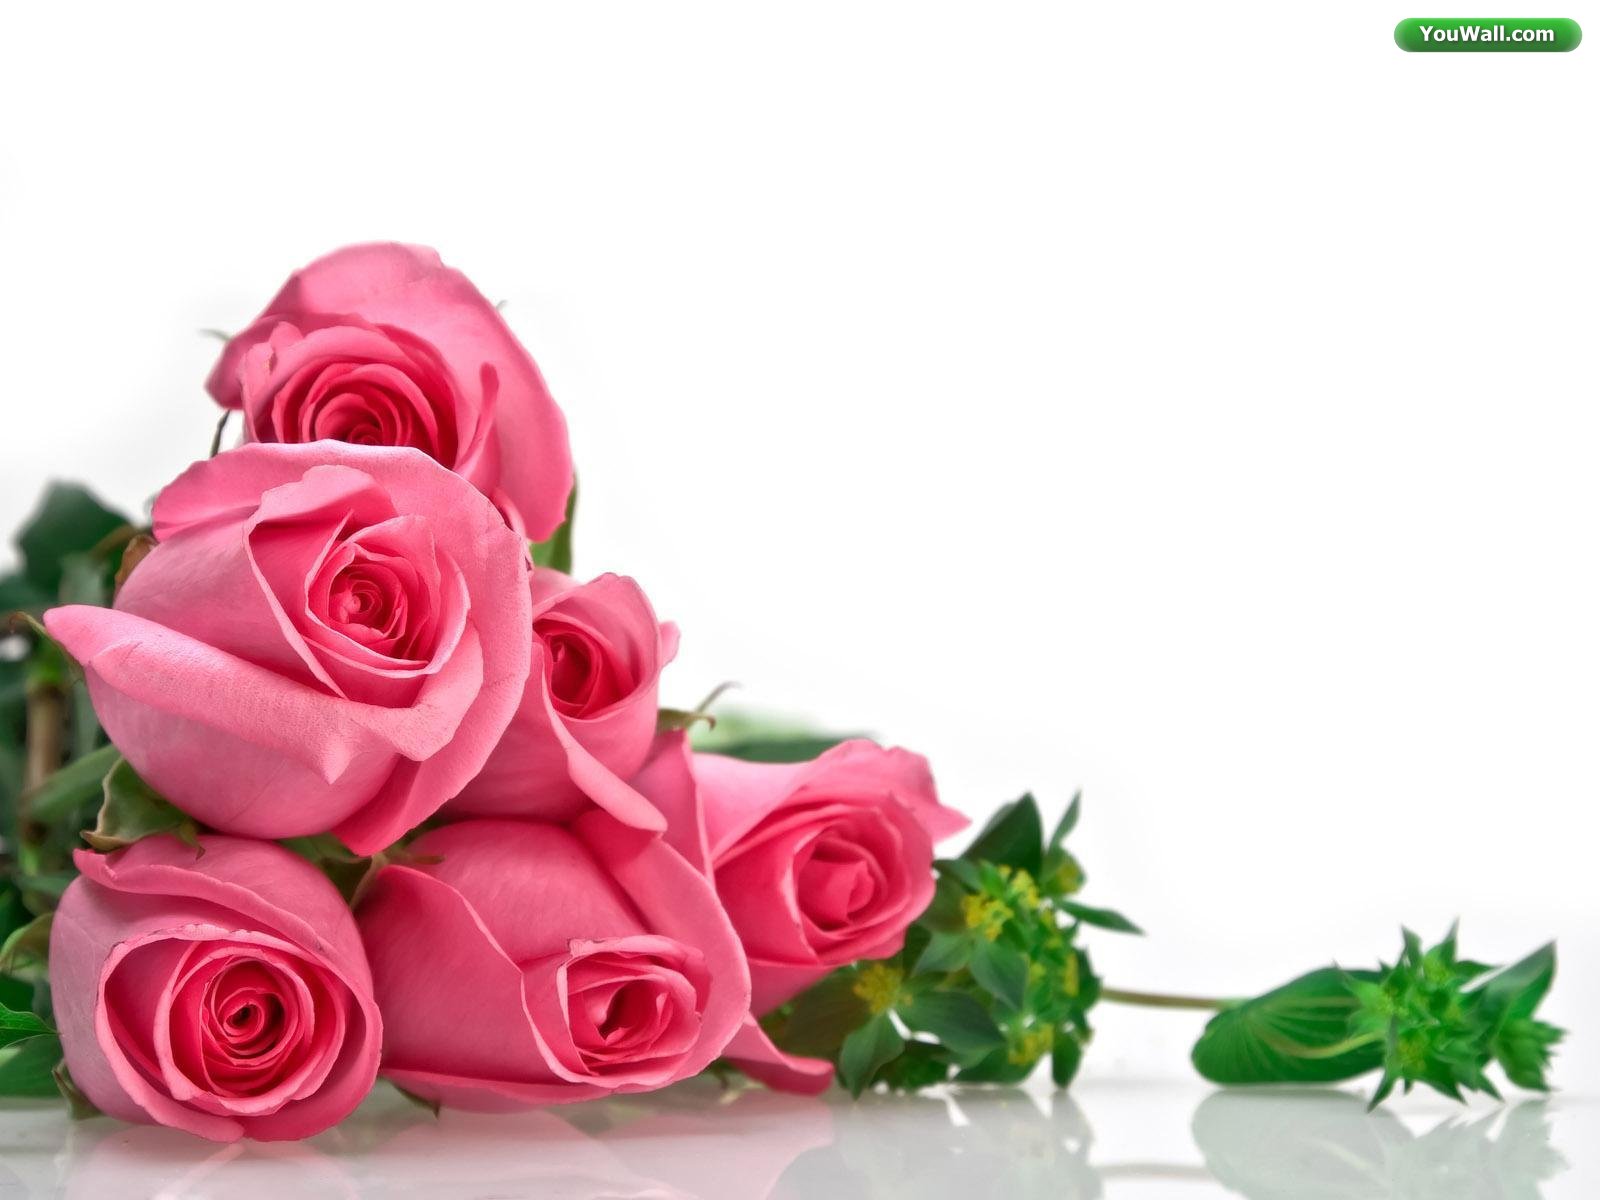 Roses Wallpaper For Desktop Pink